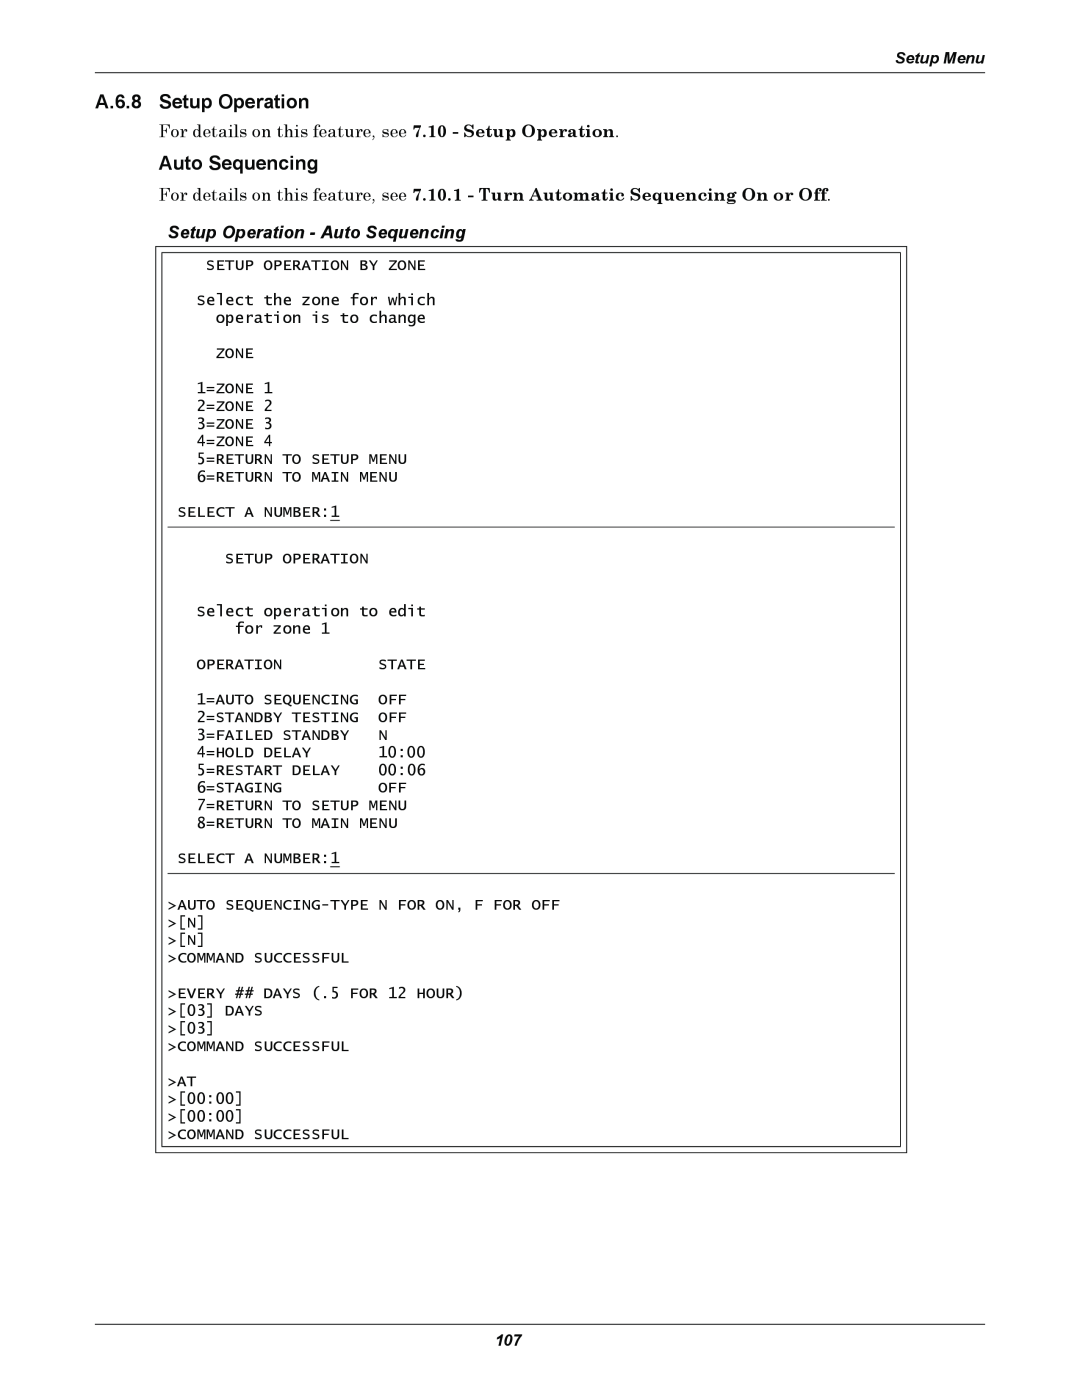 Emerson AC8 user manual A.6.8 Setup Operation, Setup Operation - Auto Sequencing, Setup Menu 